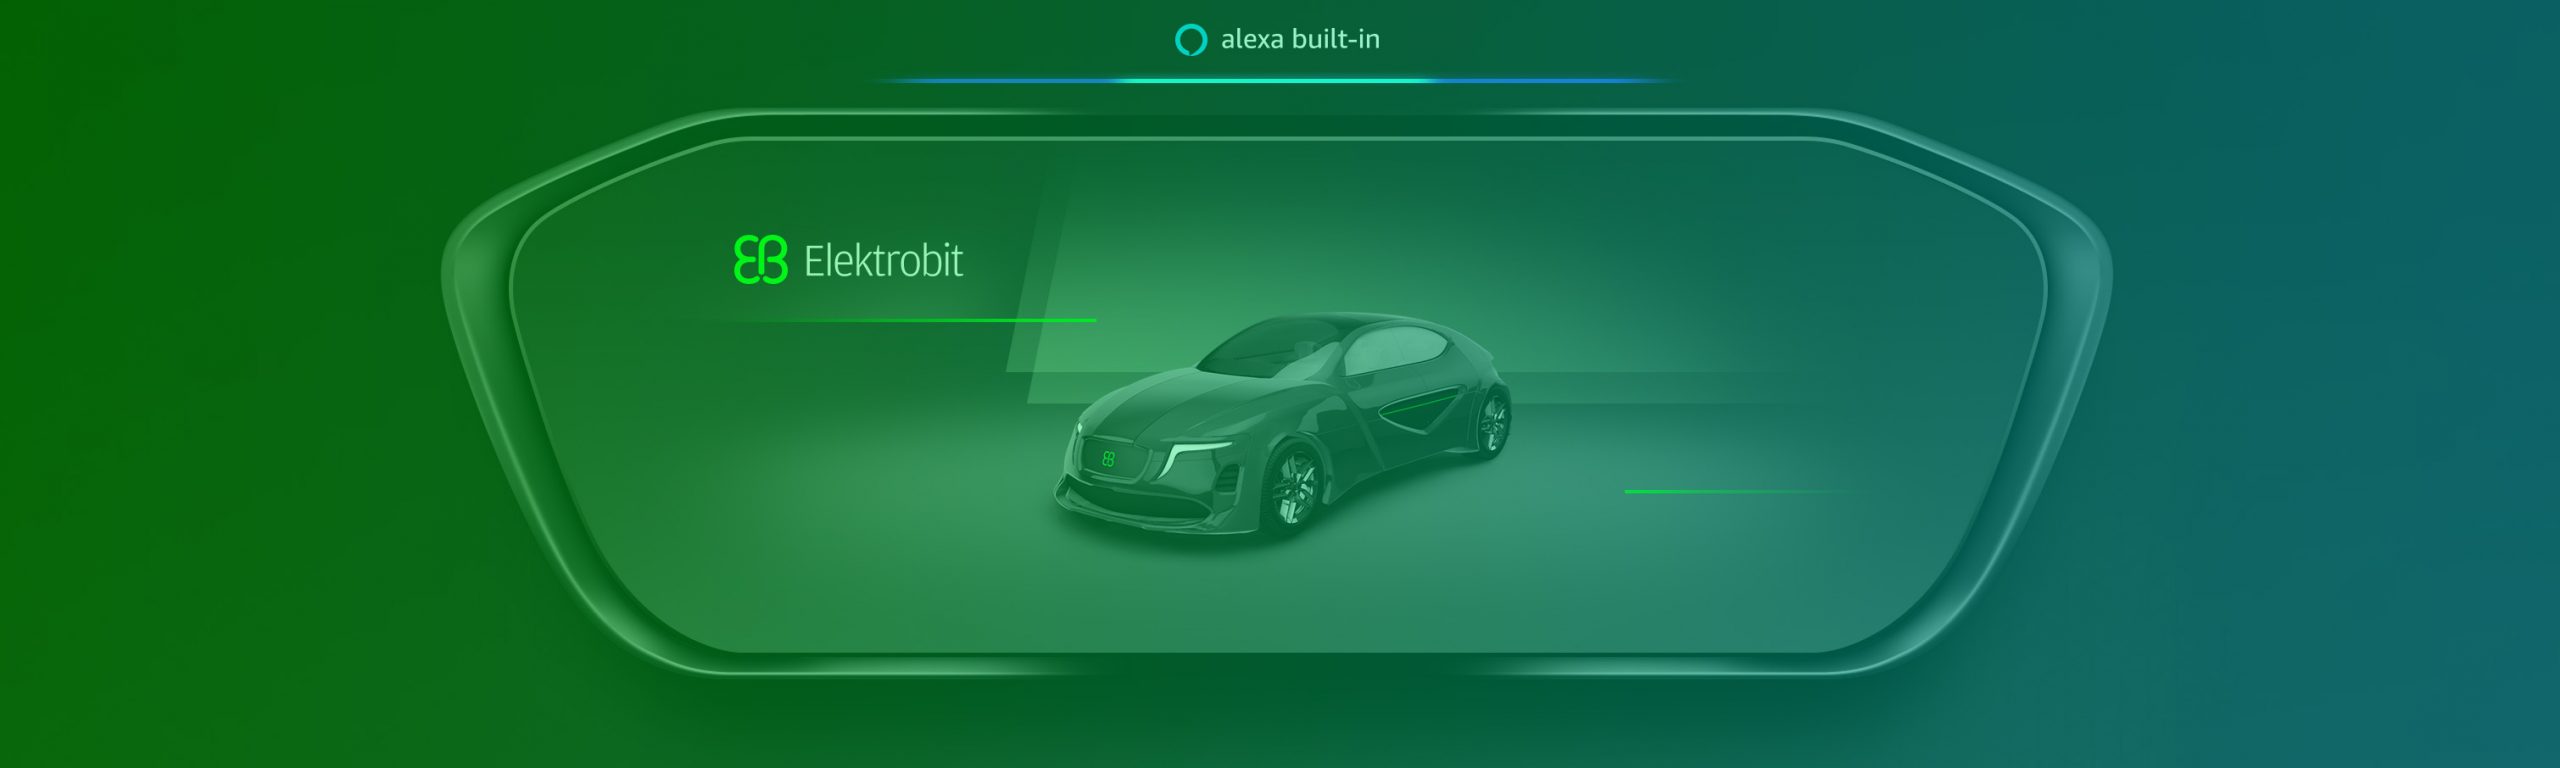 dobbeltlag købe himmel Amazon Alexa HMI integration for cars – Elektrobit